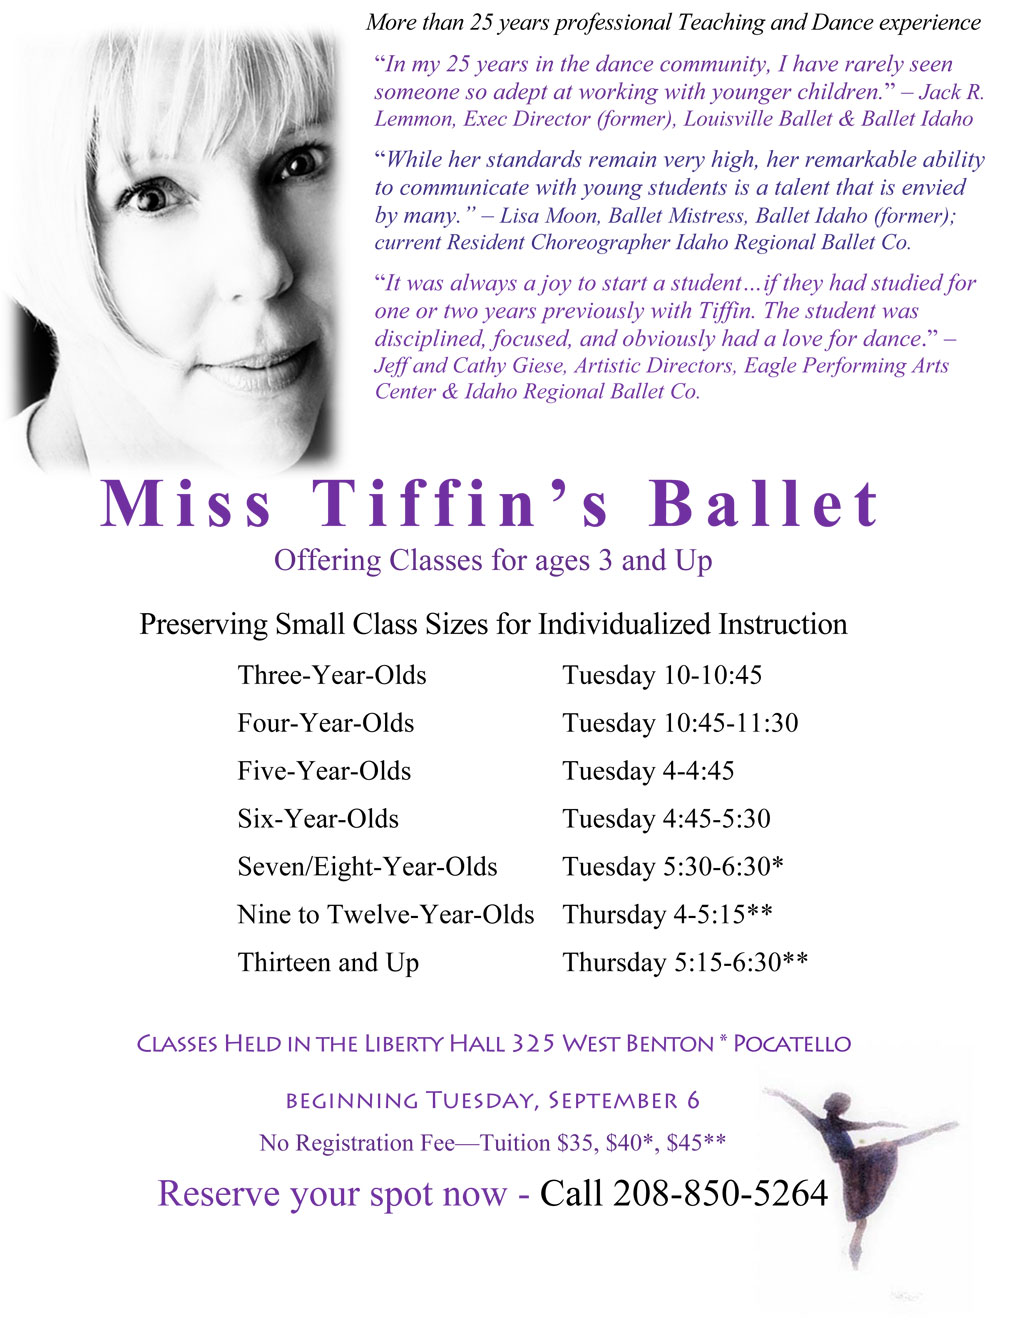 Miss Tiffin's Ballet classes for kids